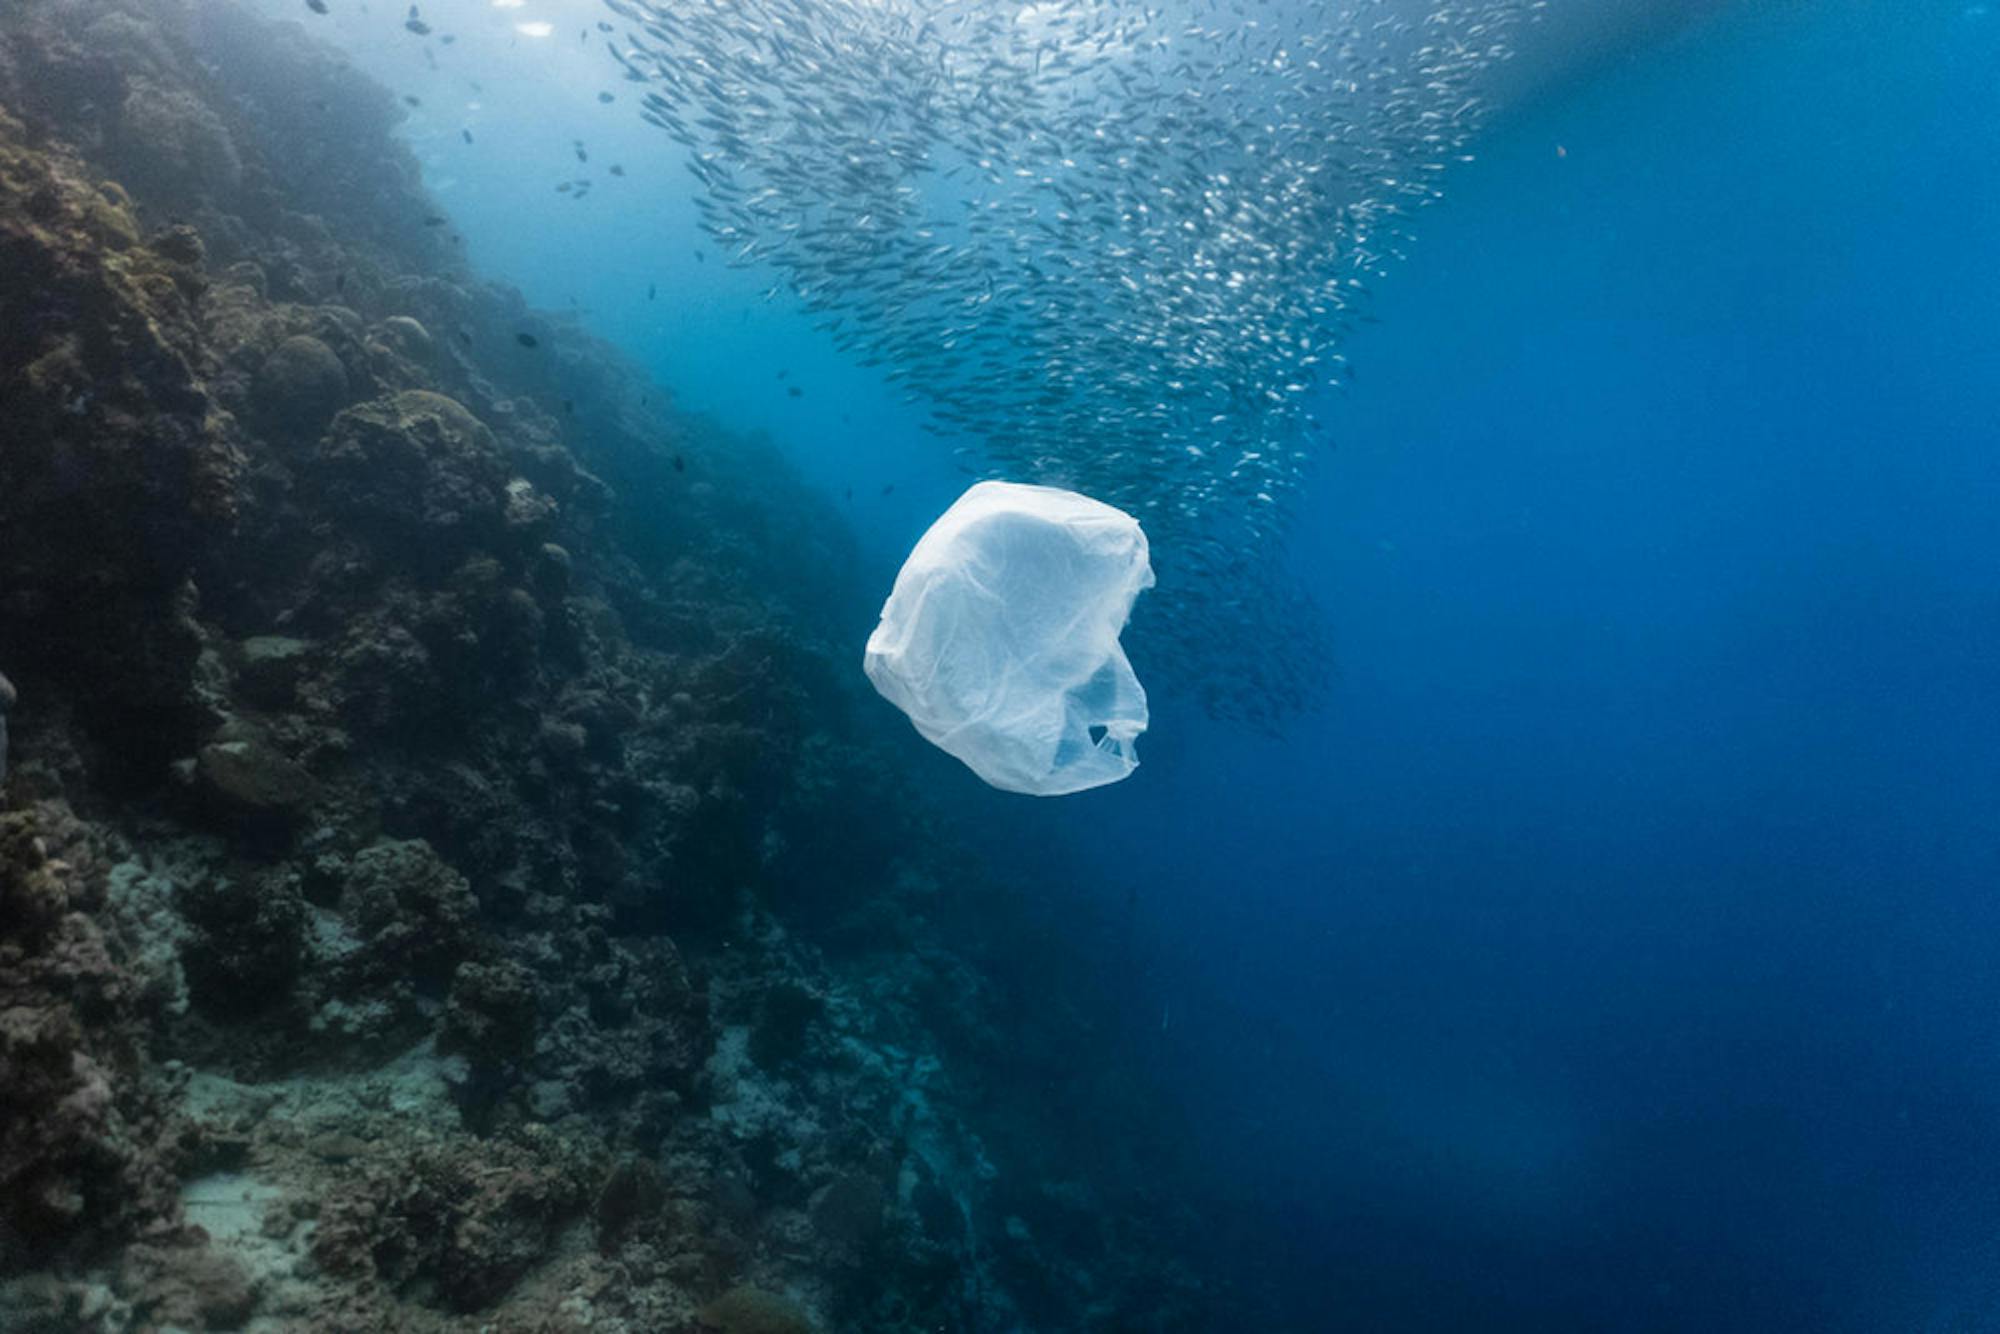 Plastic bag floats near bait ball. Image: WWF